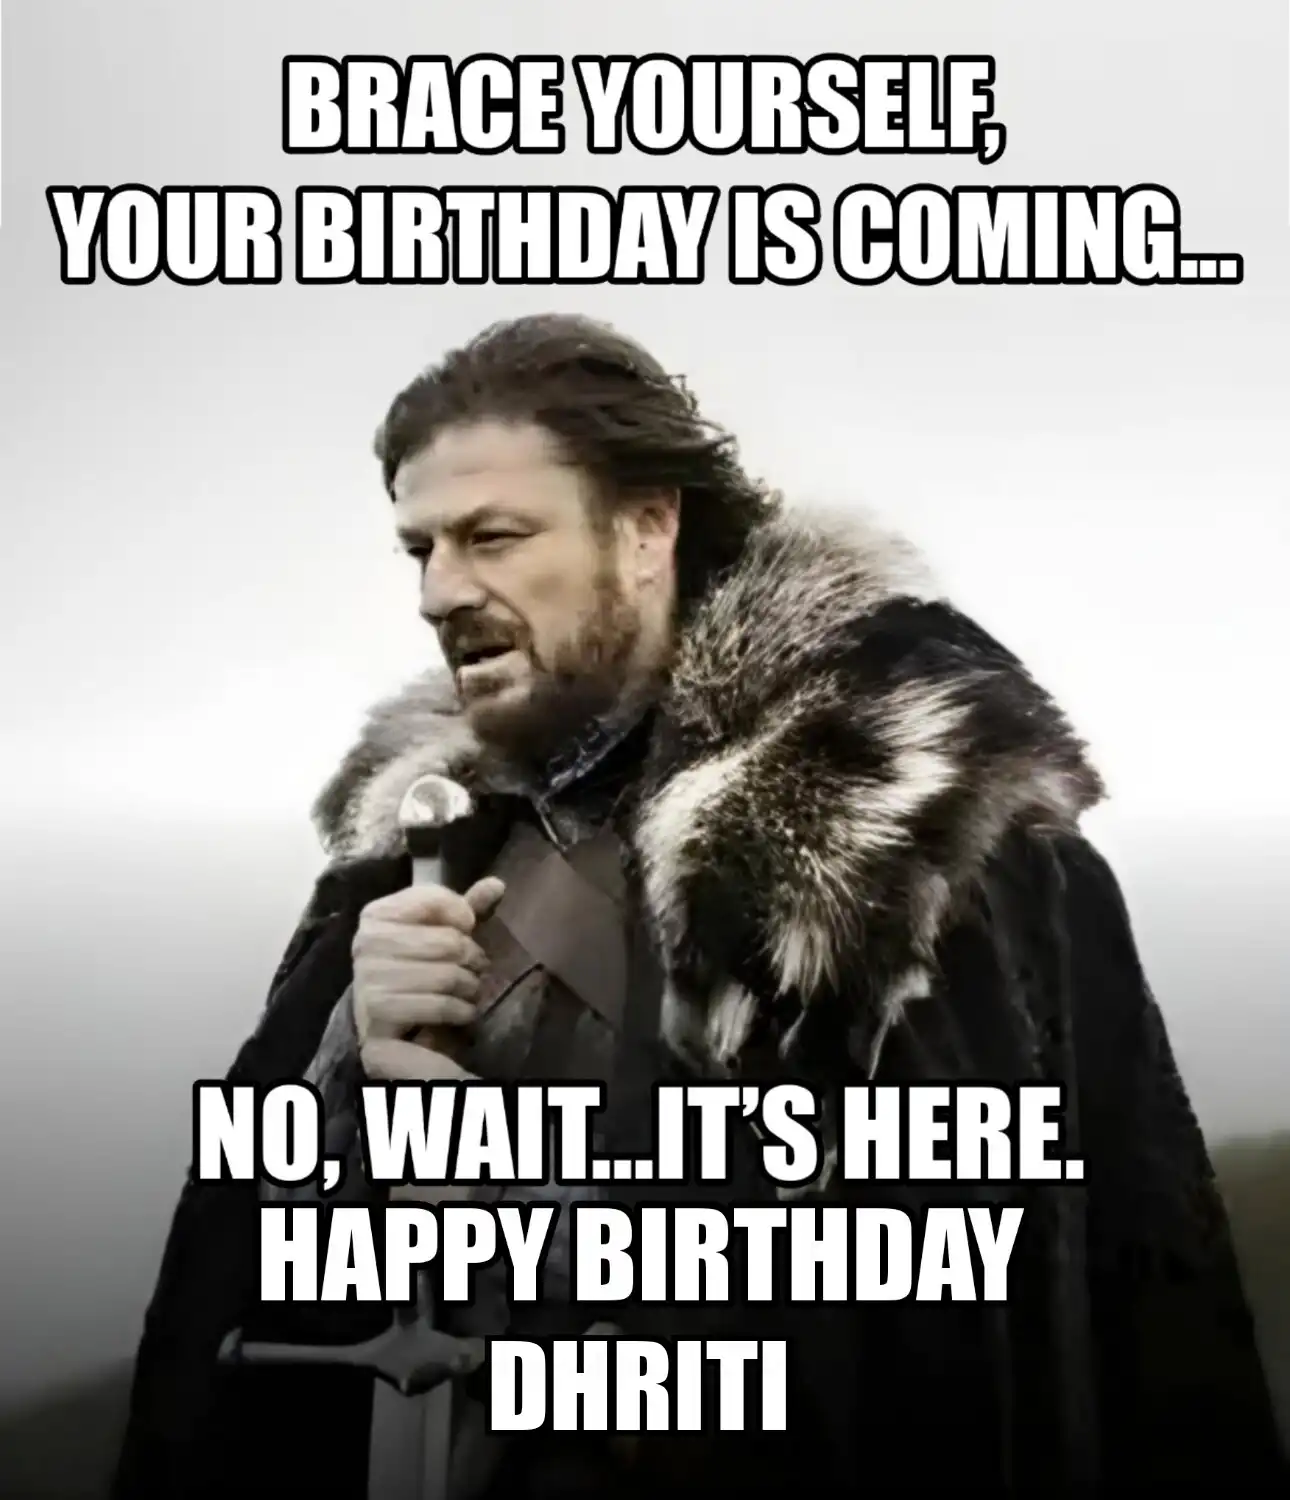 Happy Birthday Dhriti Brace Yourself Your Birthday Is Coming Meme